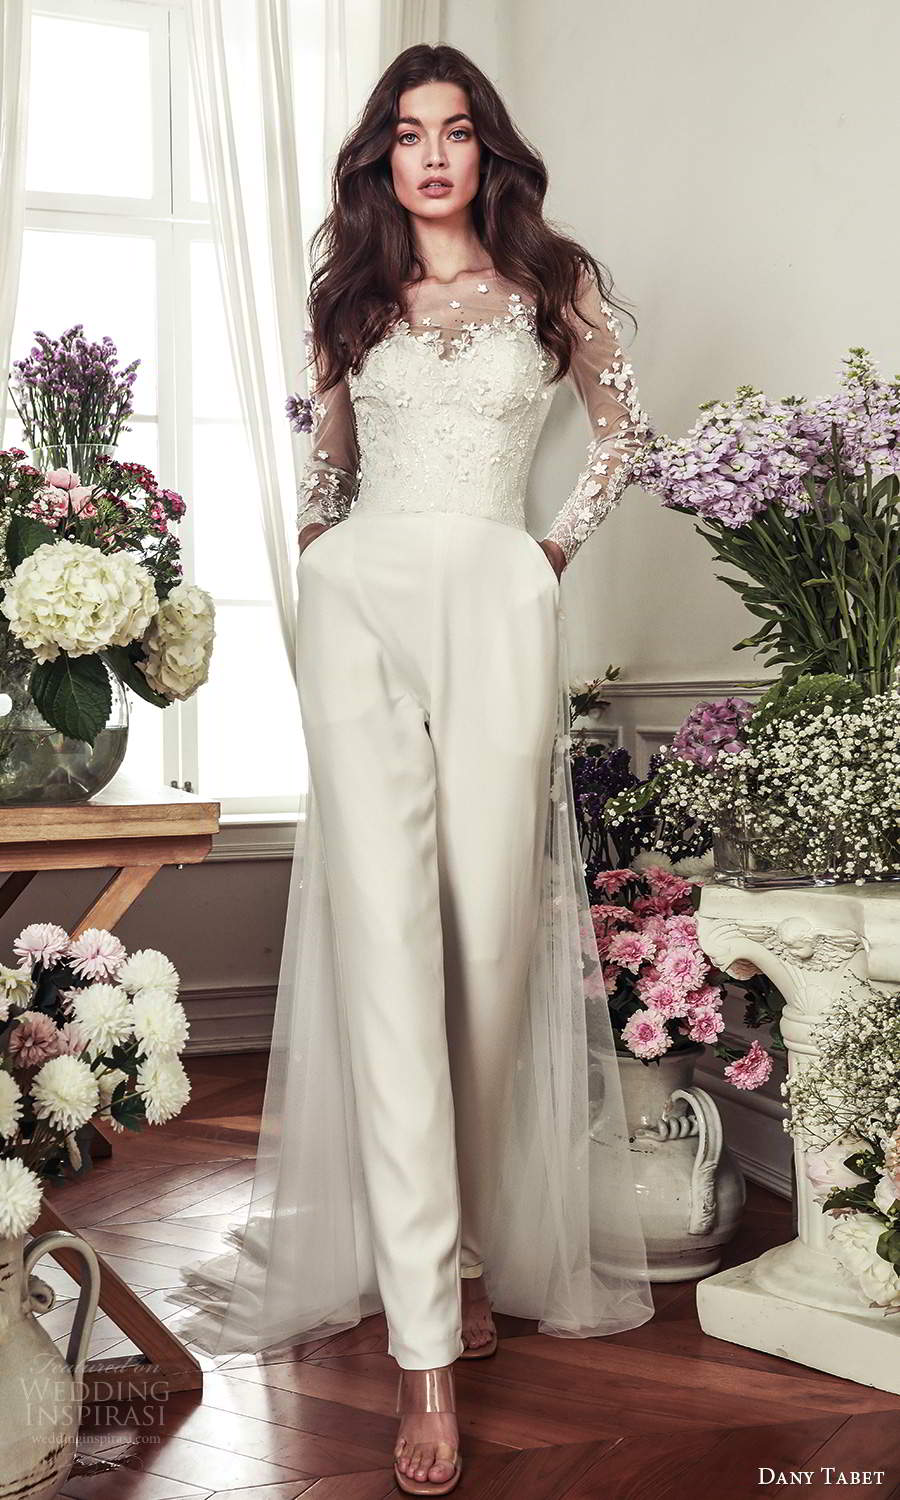 Dany Tabet 2021 “Belle Fleur” Wedding Dresses | Wedding Inspirasi